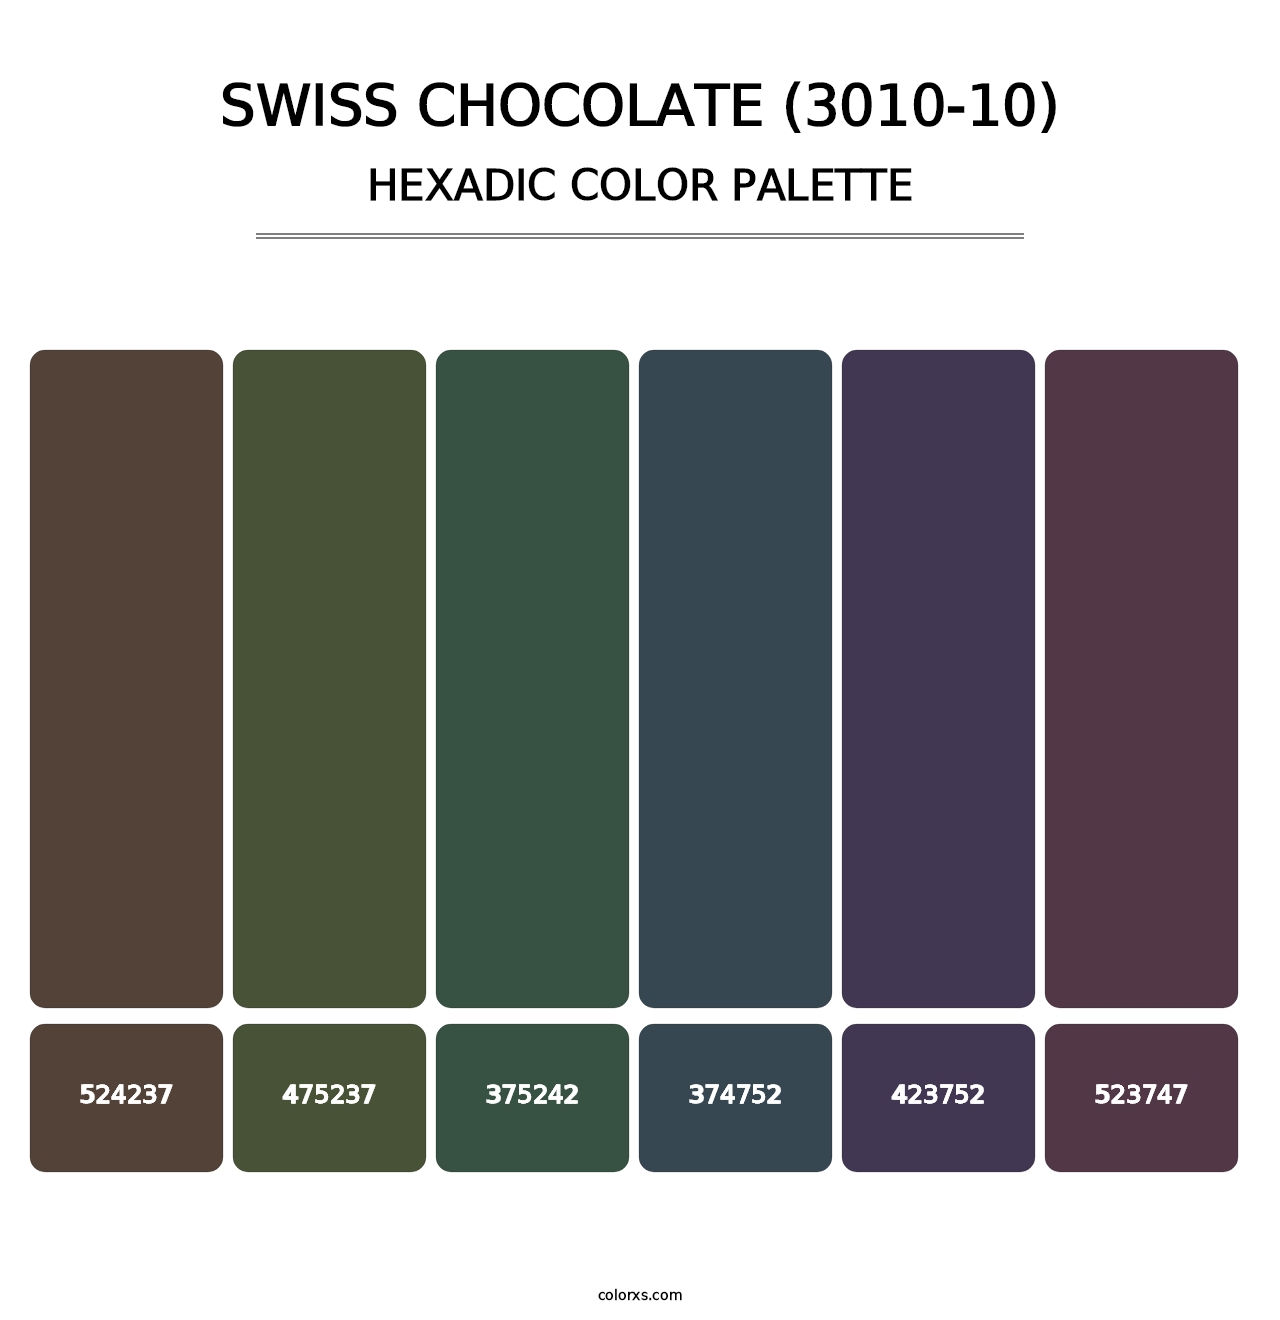 Swiss Chocolate (3010-10) - Hexadic Color Palette